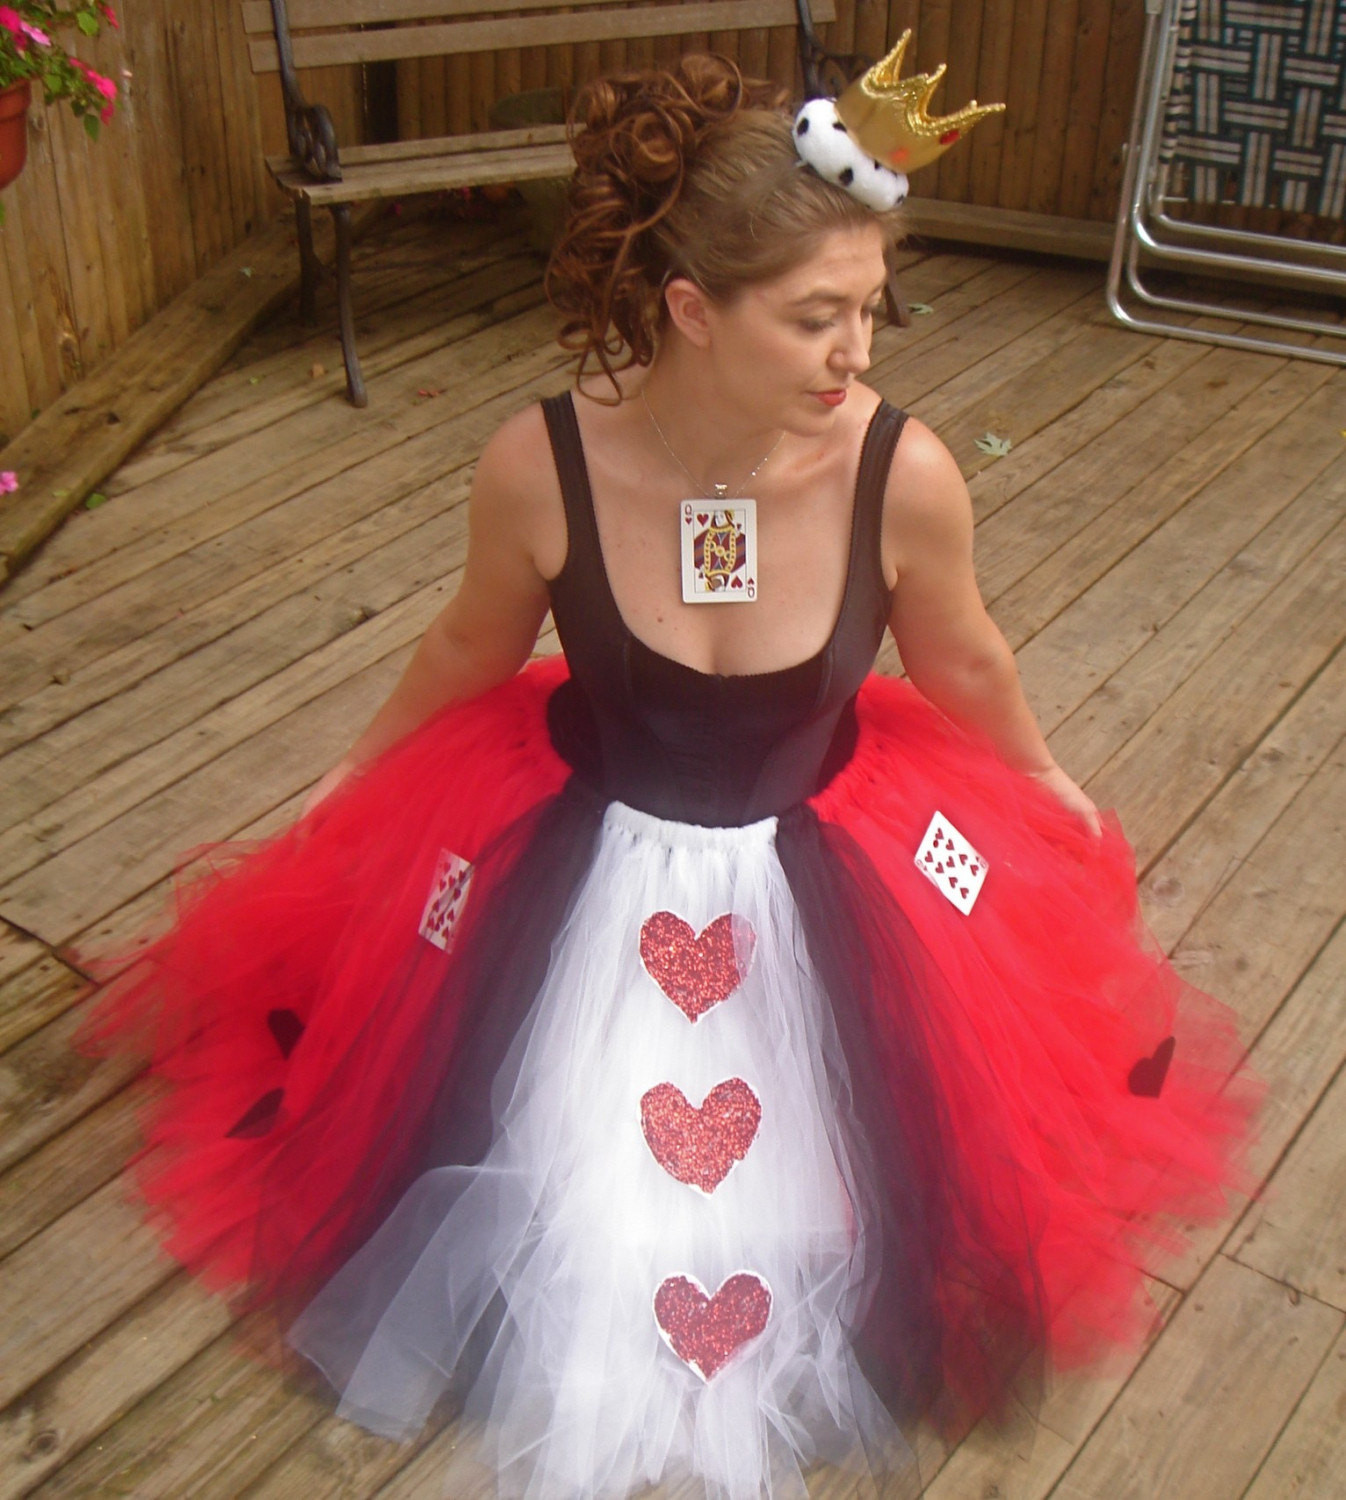 DIY Tutu Adult
 Queen of Hearts Adult Boutique Tutu Skirt Costume